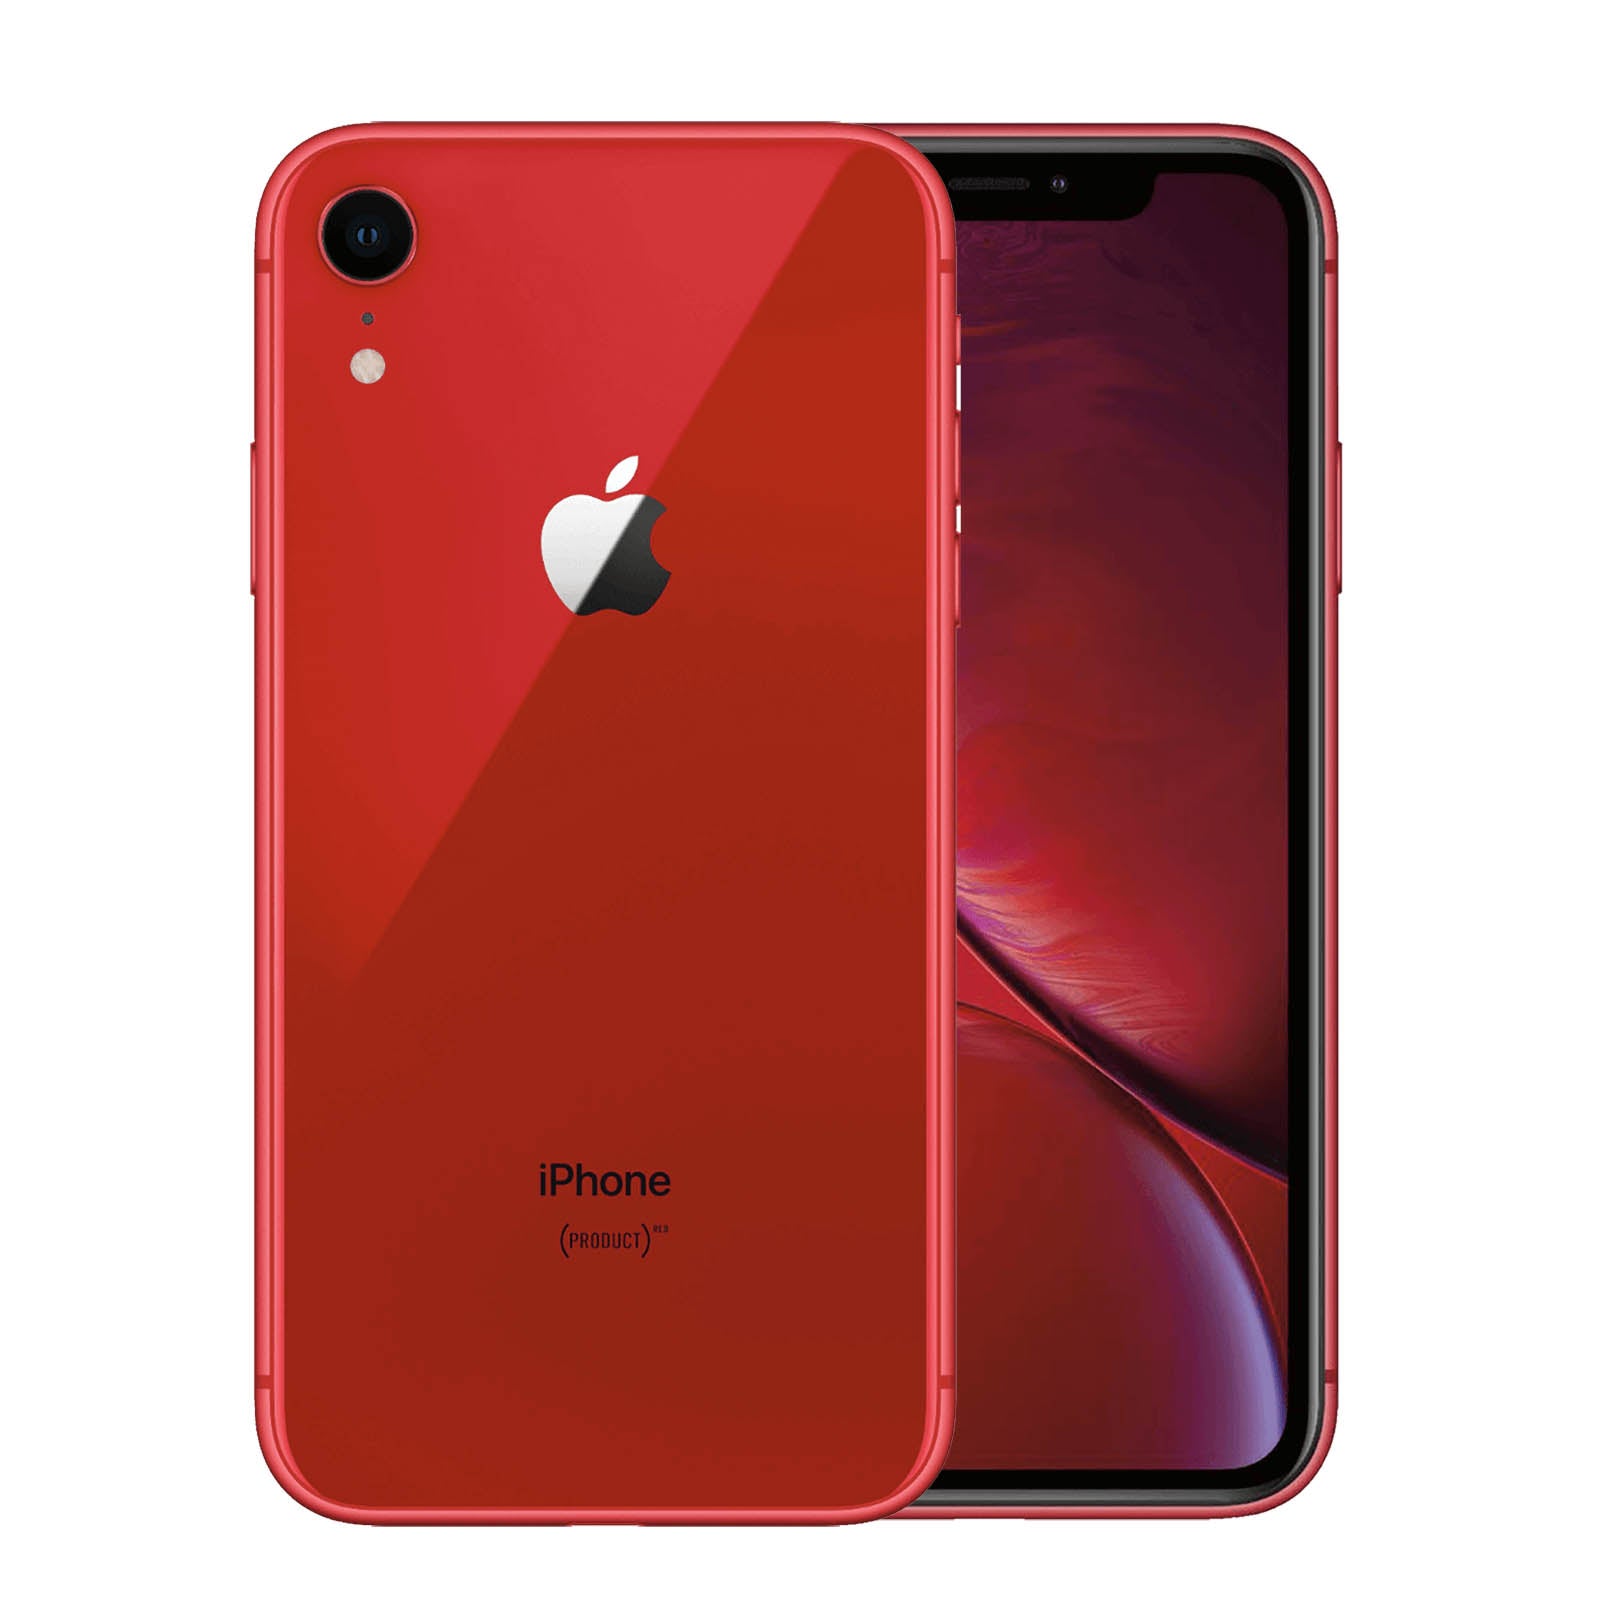 Apple iPhone XR 64GB Product Red Fair - Unlocked